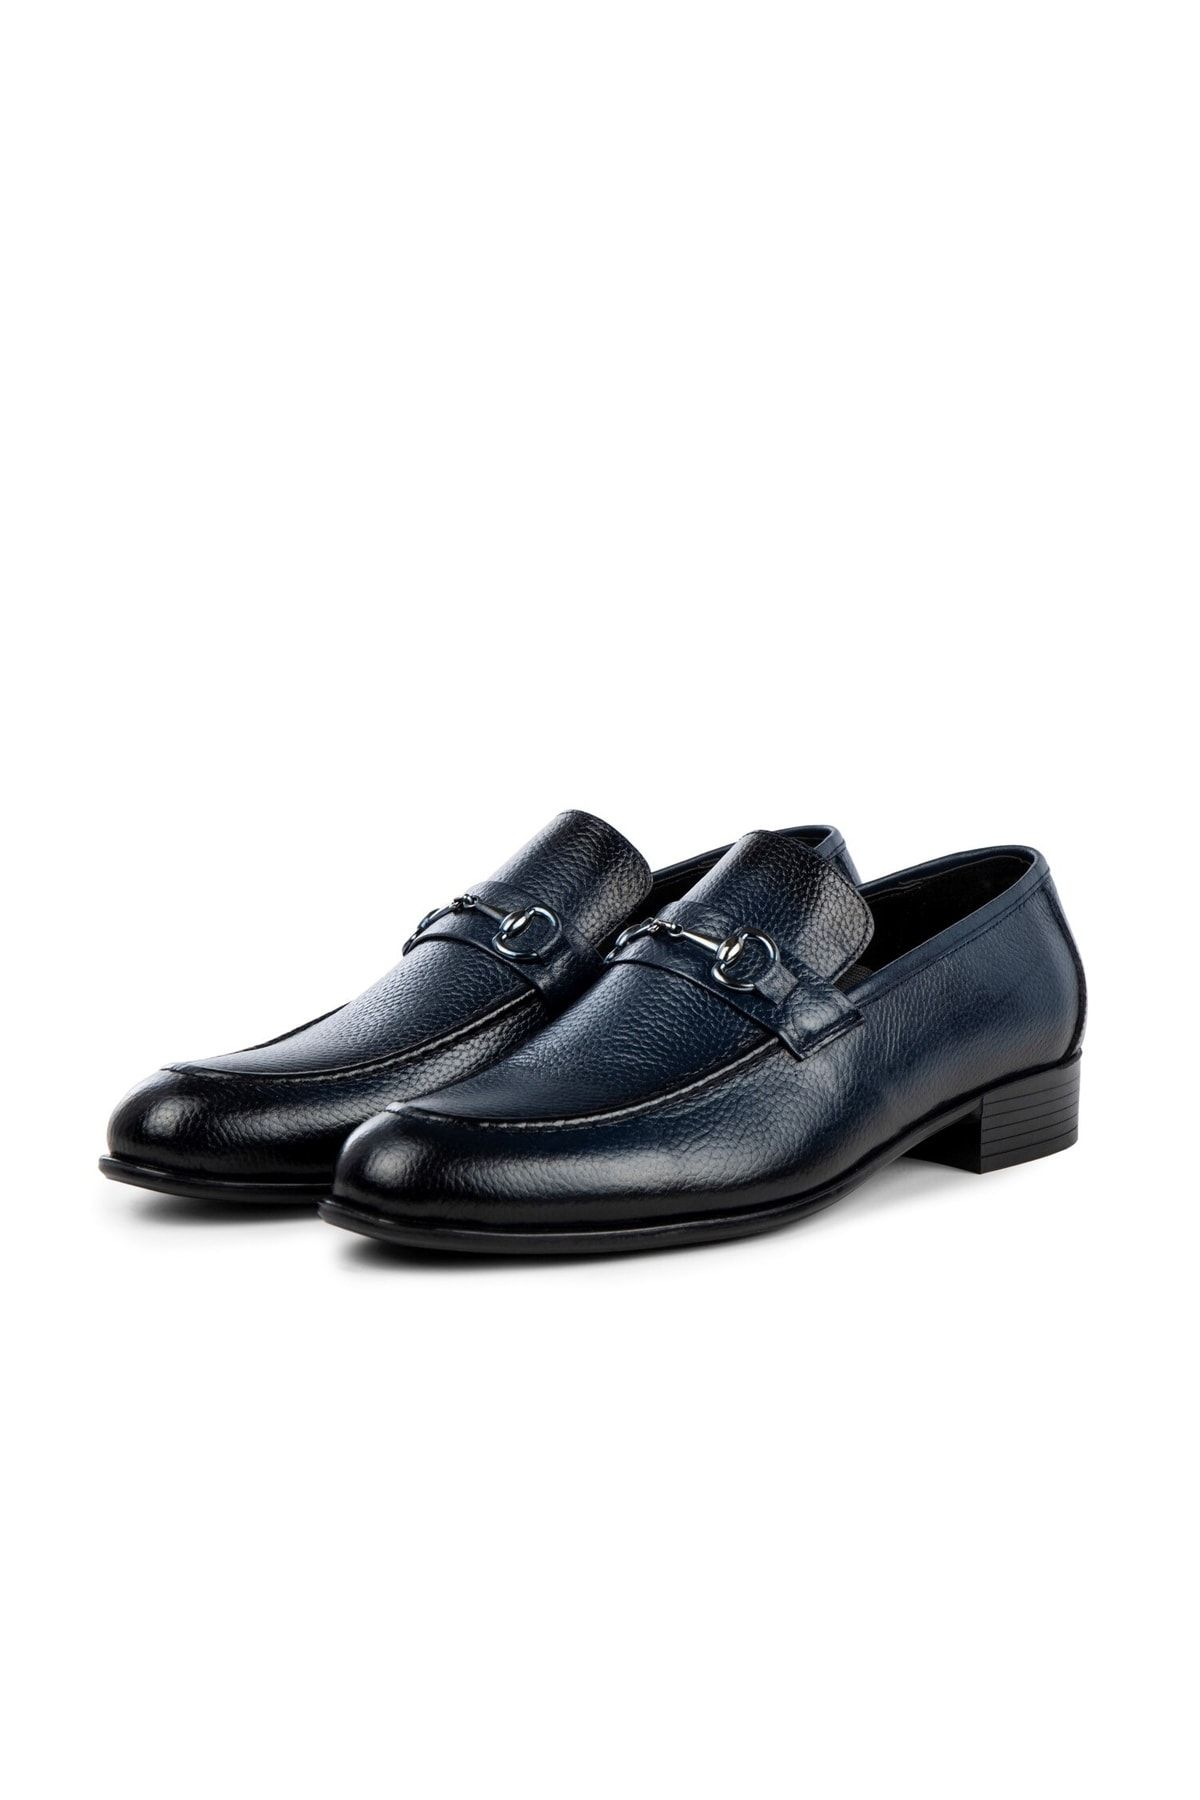 Ducavelli Sidro Hakiki Deri Erkek Klasik Ayakkabı, Loafer Klasik Ayakkabı, Makosen Ayakkabı